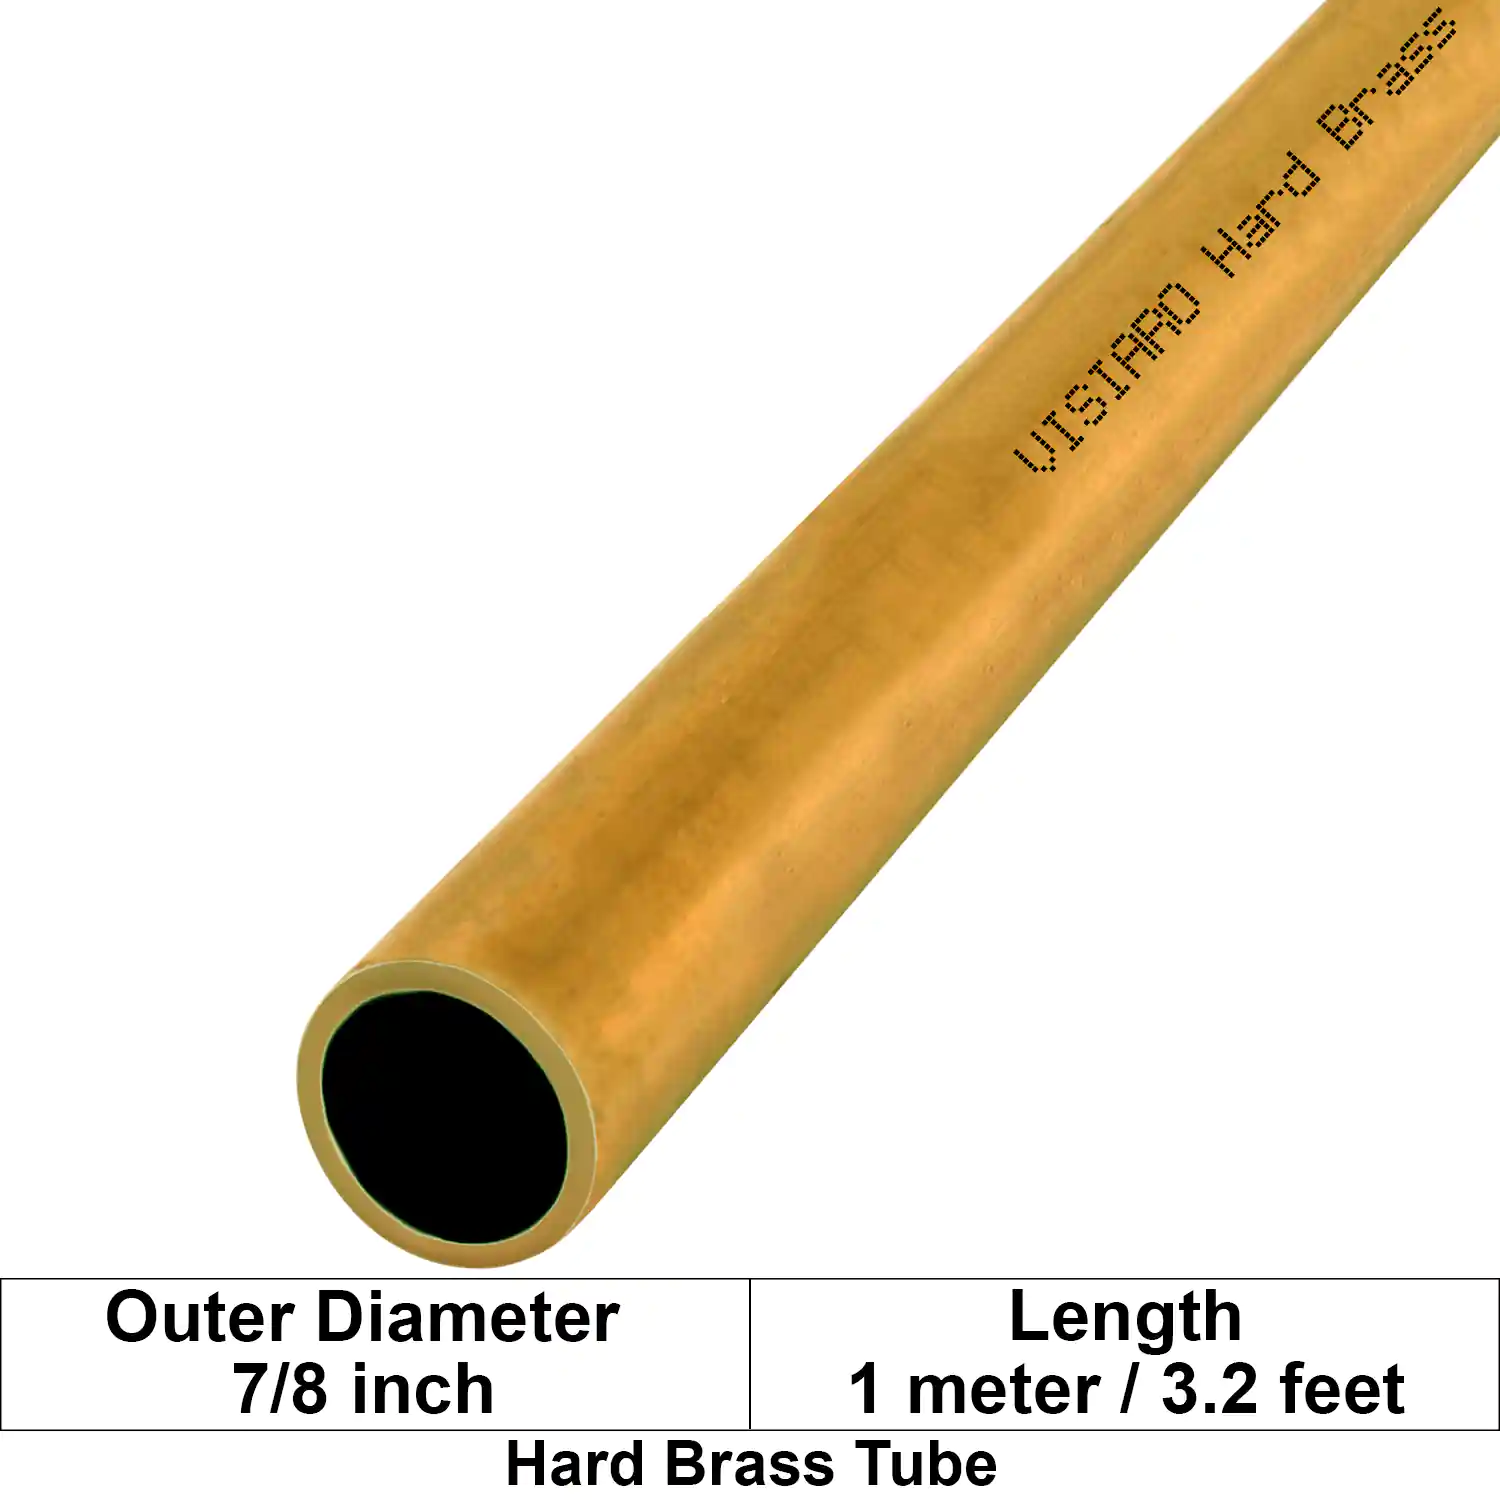 Visiaro Hard Brass Tube 1mtr long Outer Diameter - 7/8 inch